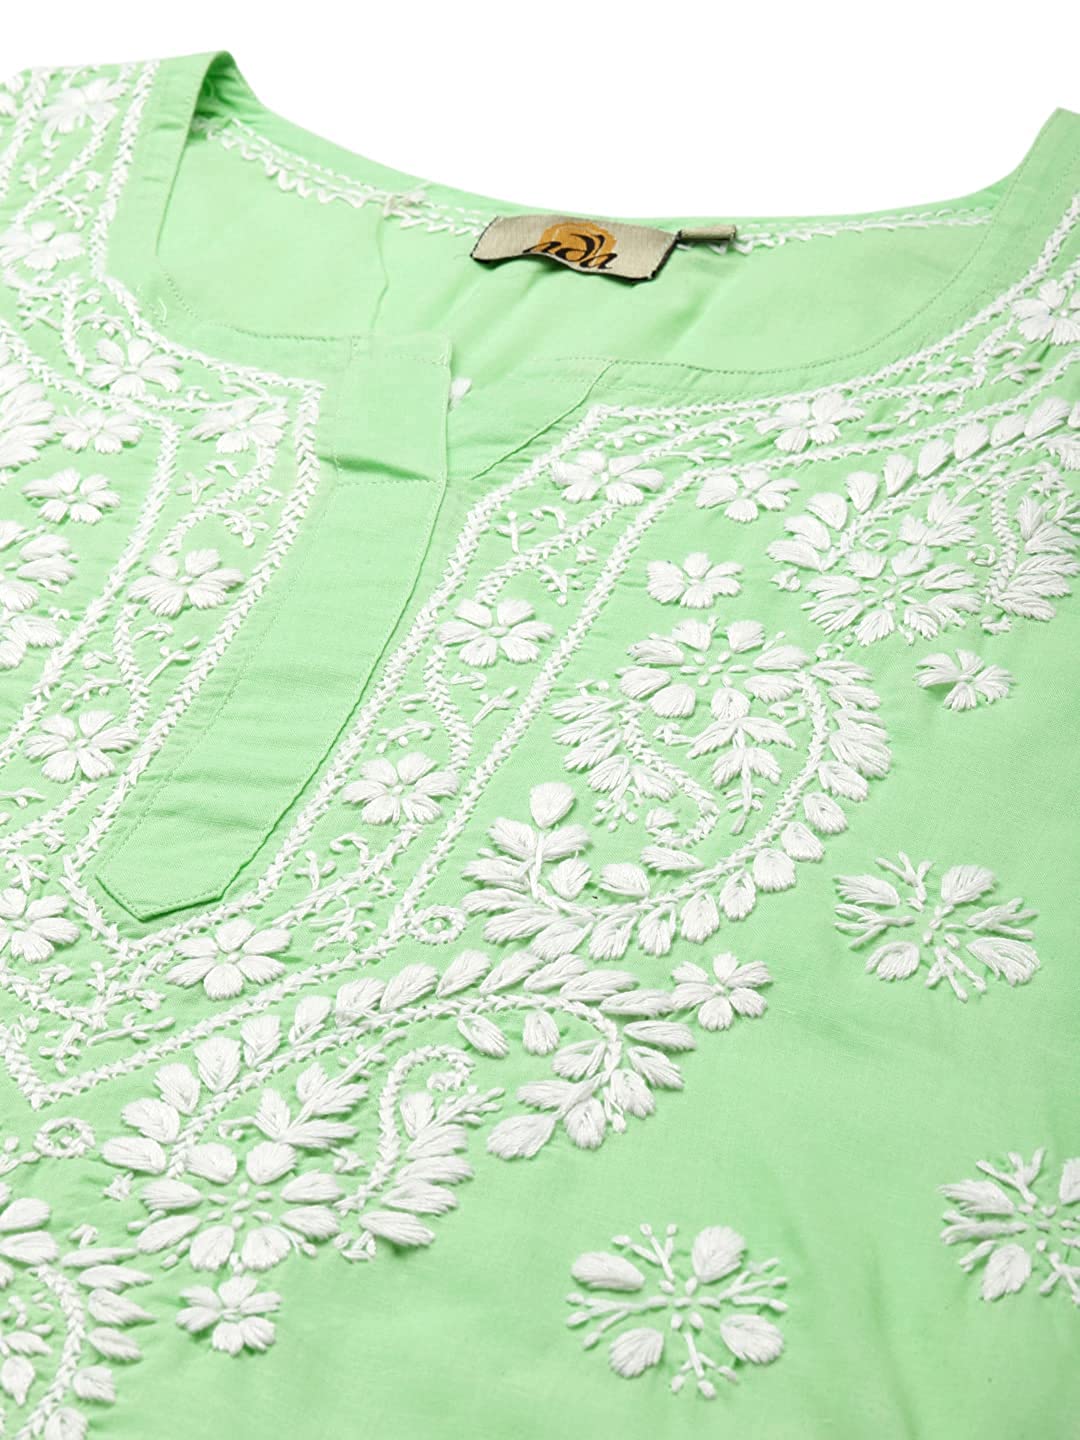 Ada Hand Embroidered Lucknow Chikankari Straight Cotton Short Kurti Tunic Top for Women A250295 -  Kurtas & Kurtis in Sri Lanka from Arcade Online Shopping - Just Rs. 7099!